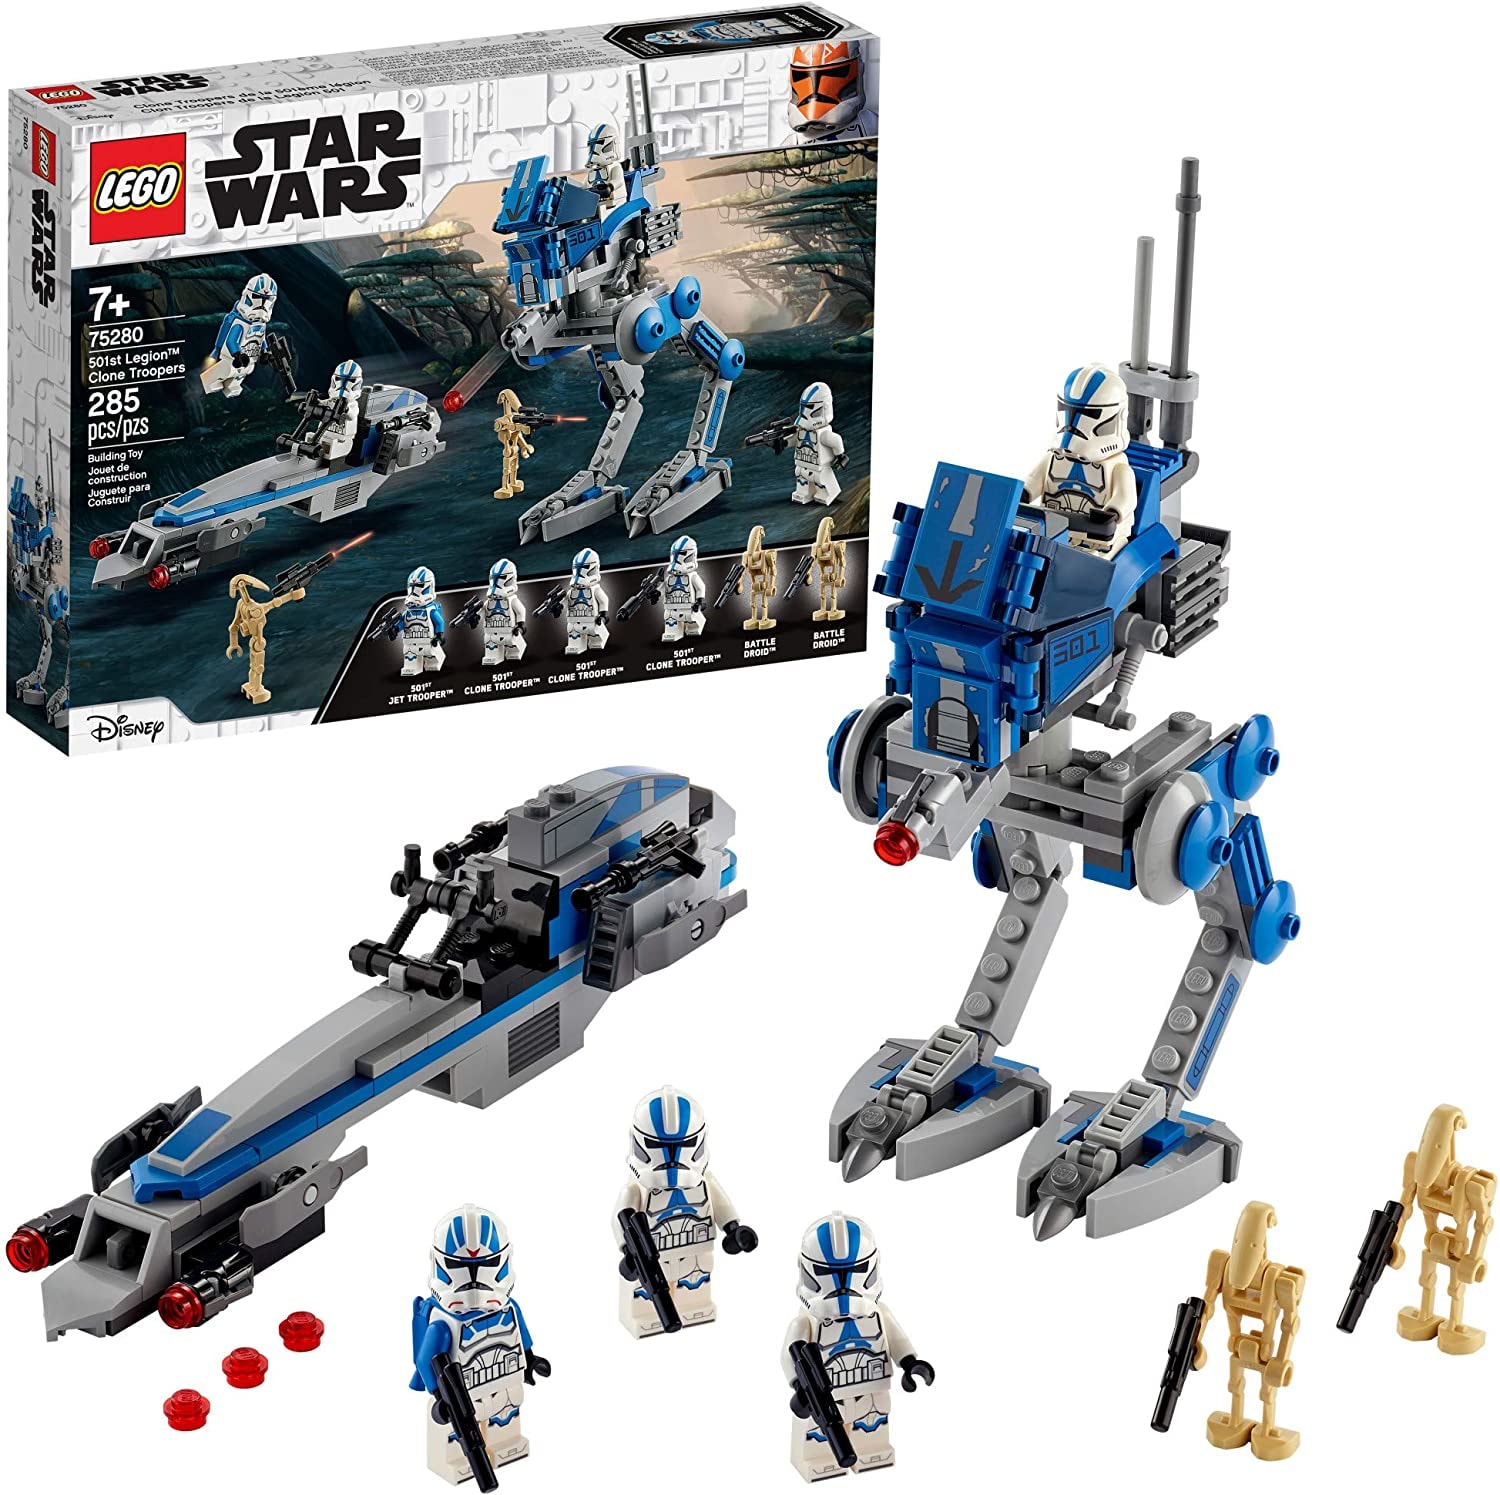 LEGO Star Wars 501st Legion Clone Troopers 